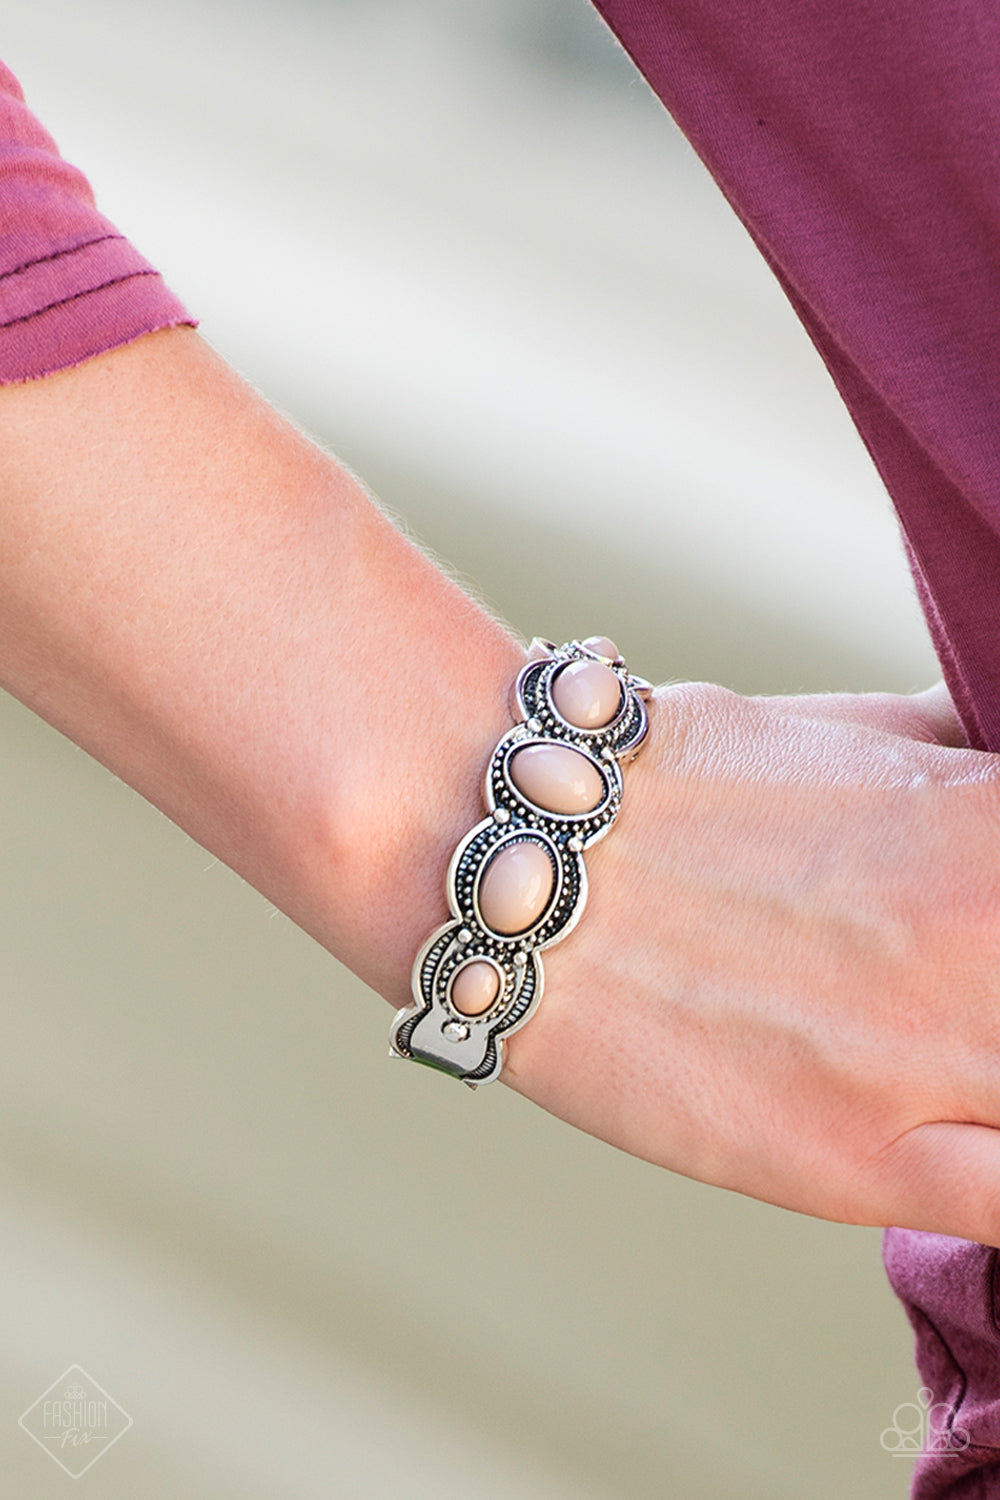 Paparazzi Desert Farer - Brown Beads - Cuff Bracelet - Fashion Fix / Trend Blend Exclusive - $5 Jewelry With Ashley Swint